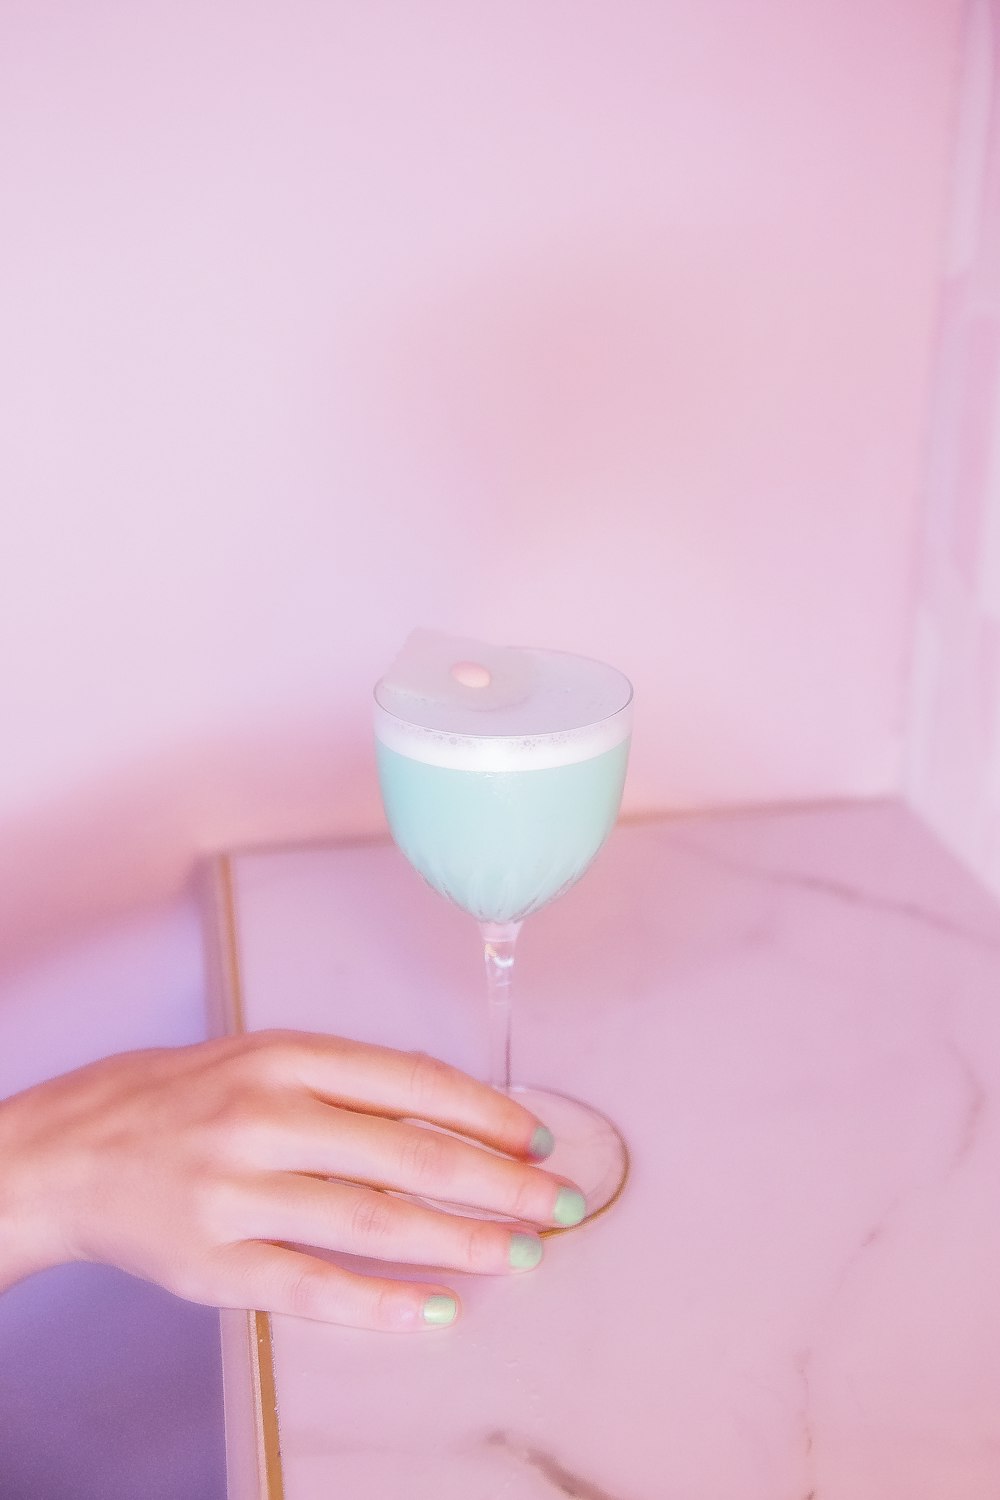 a hand holding a glass of blue liquid